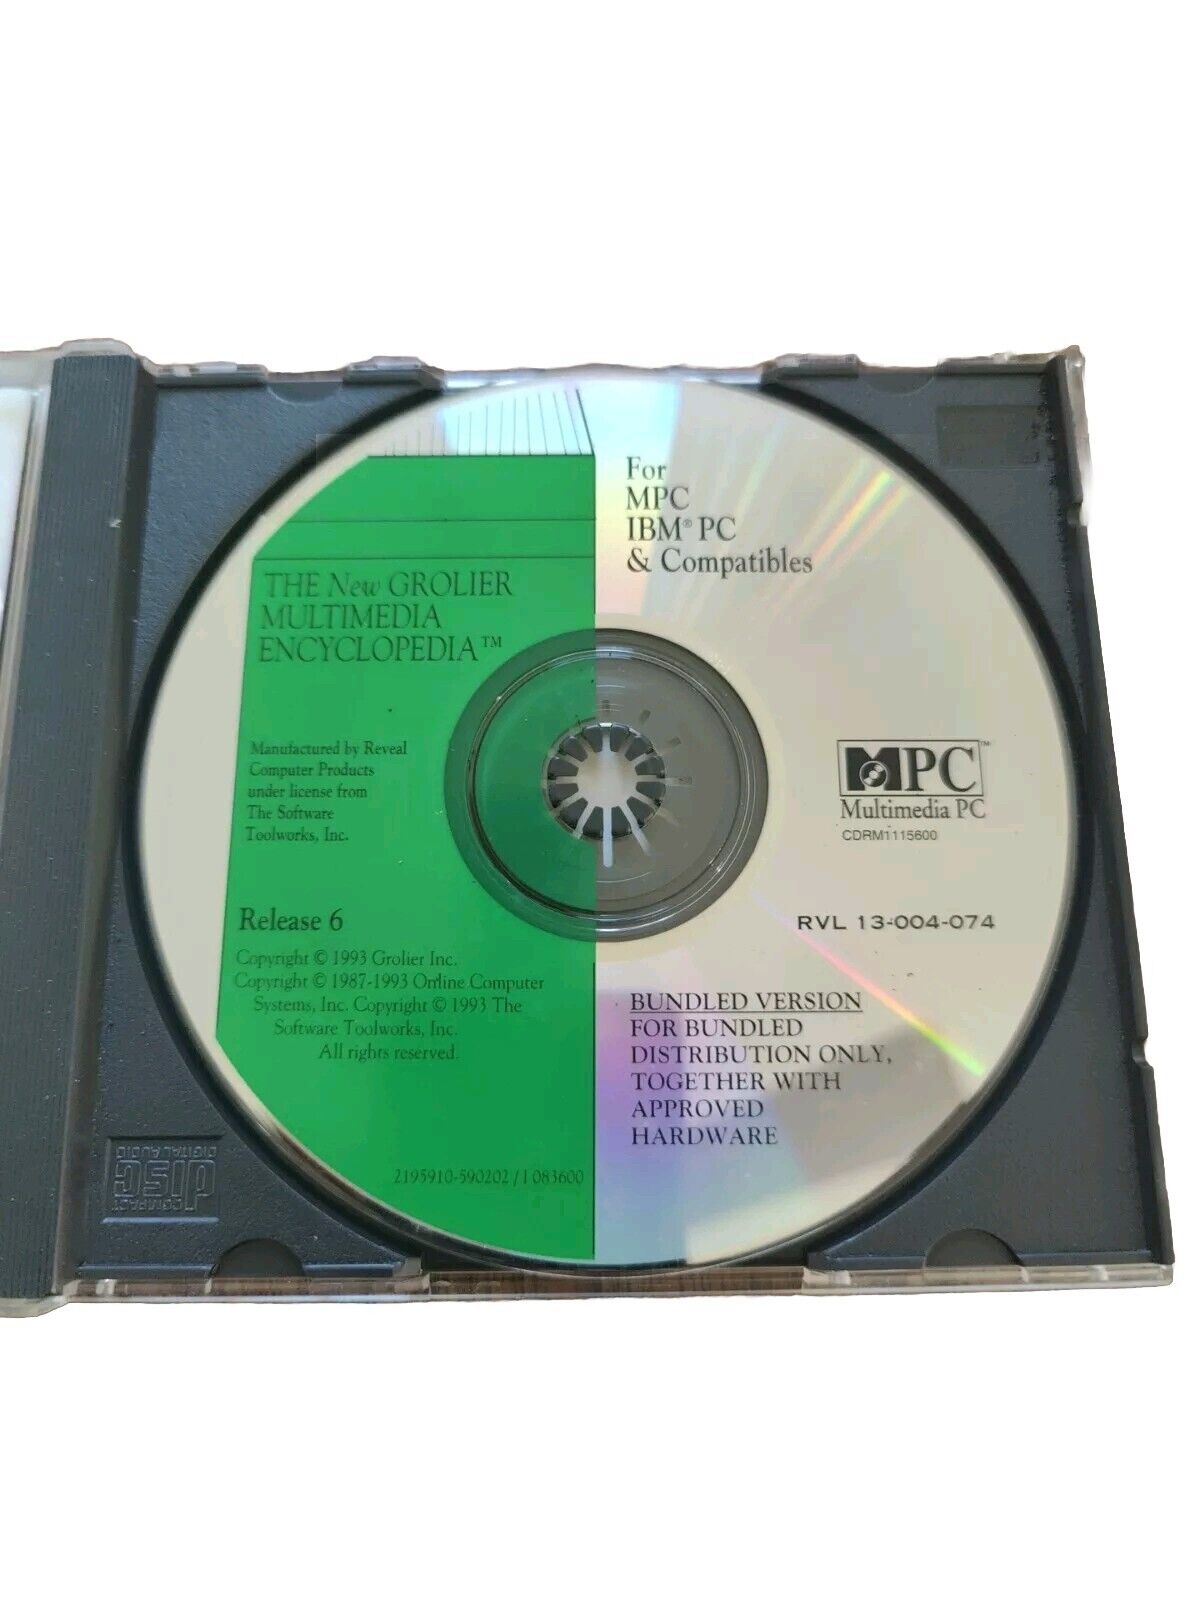 The New Grolier Multimedia Encyclopedia Software 1993 